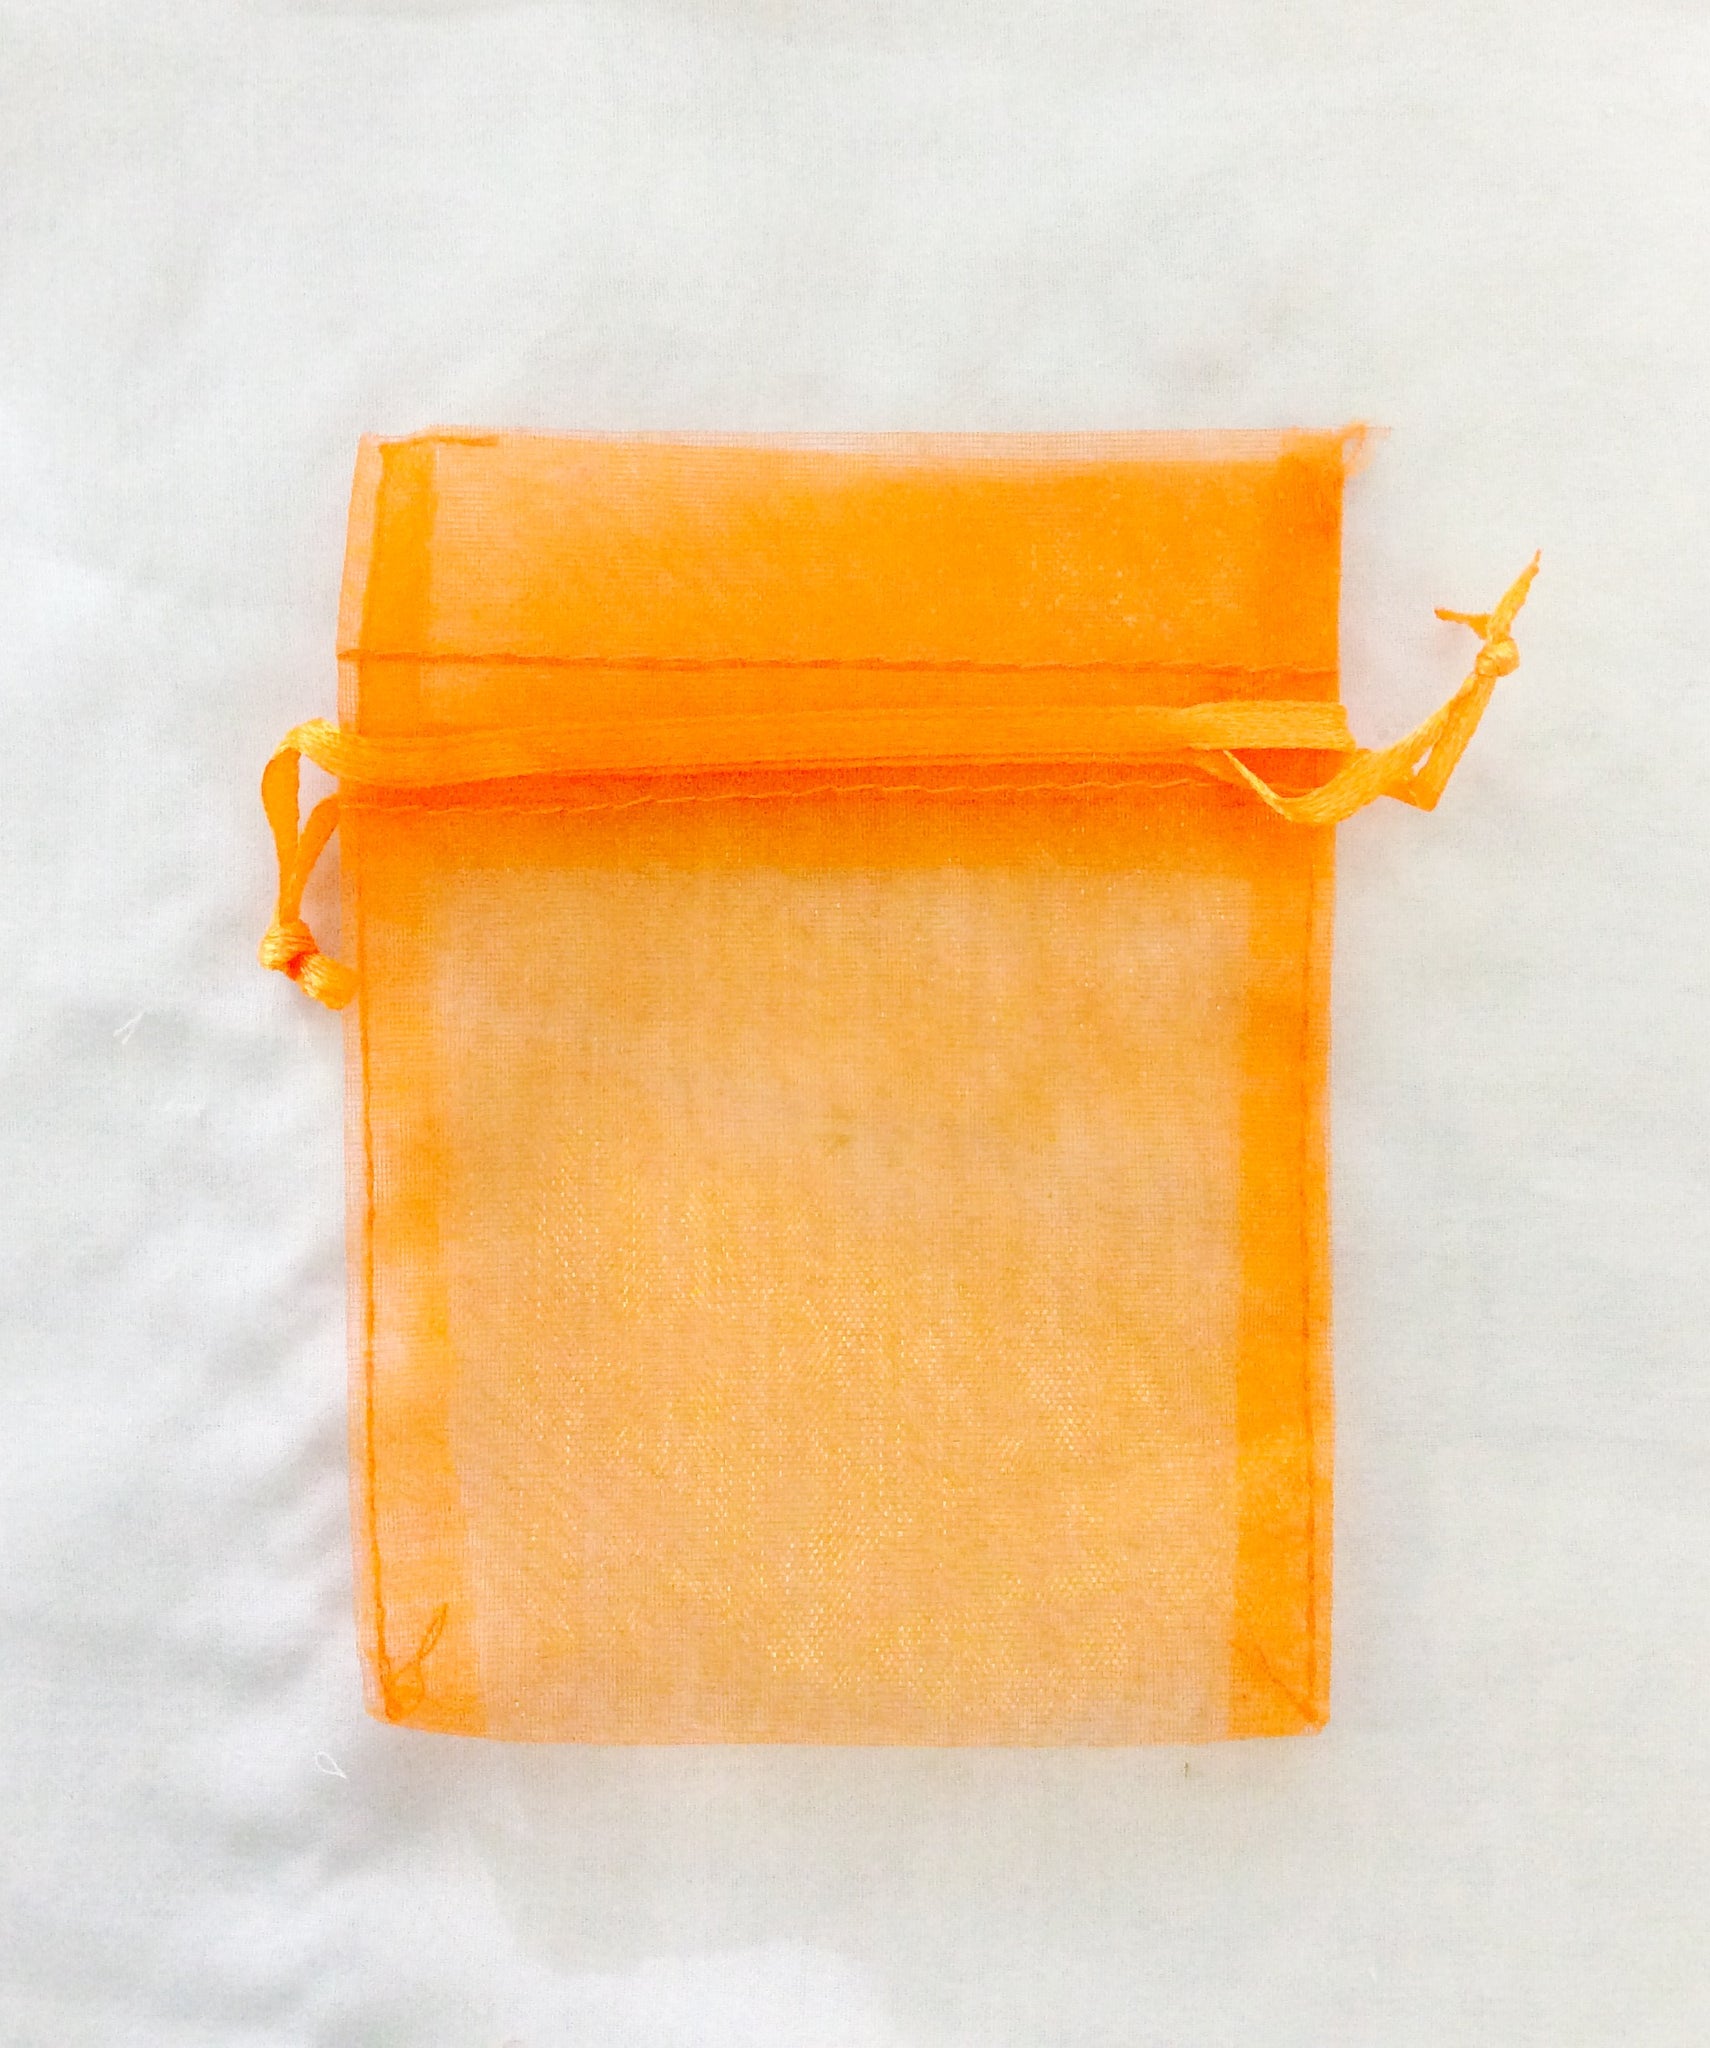 Medium Organza Bags 6-pk (5x4) Orange #3040OR